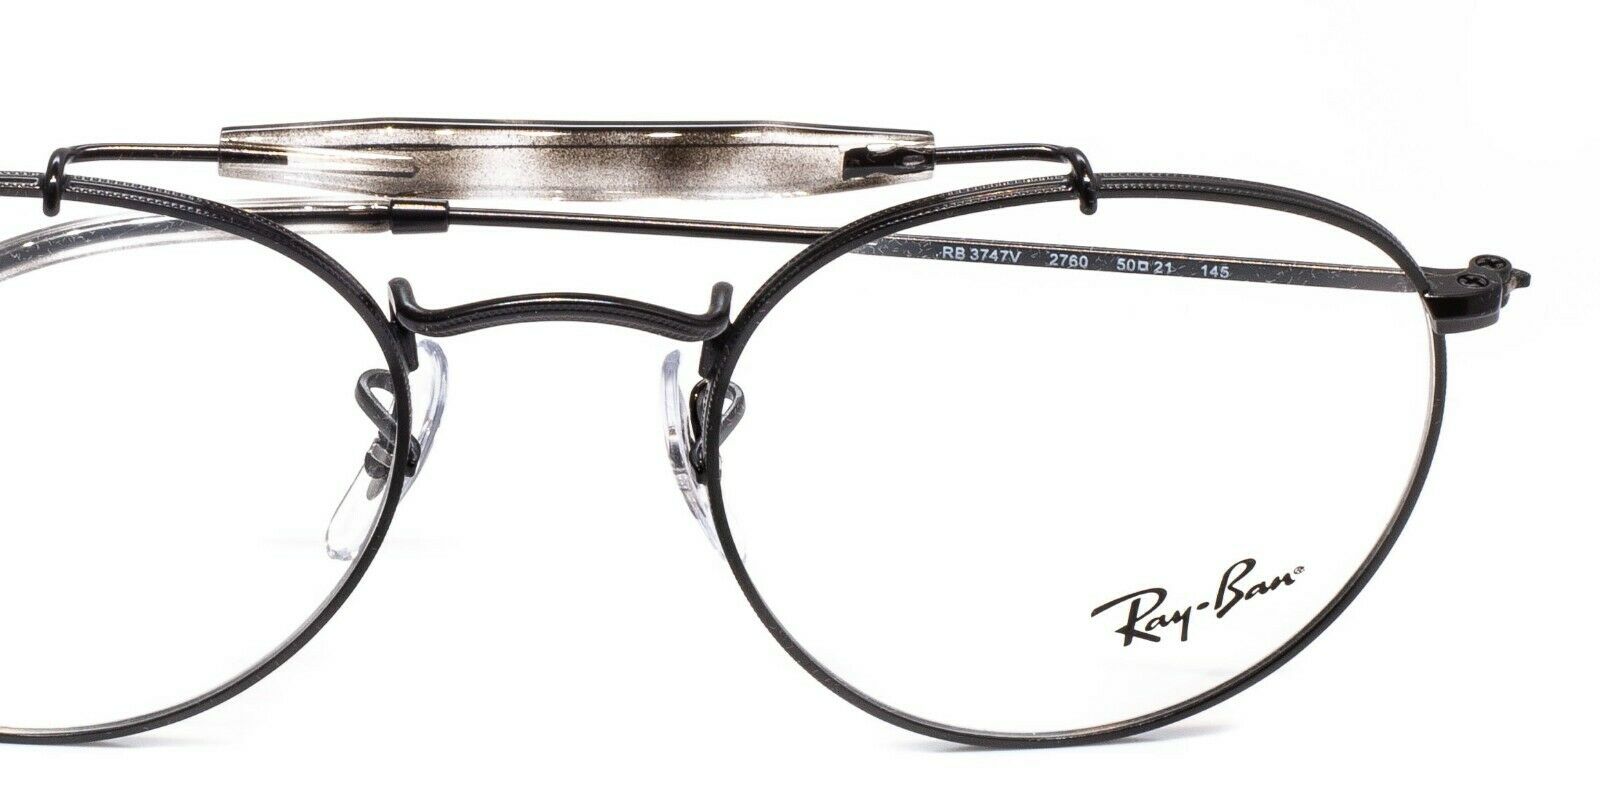 RAY BAN RB 3747V 2760 50mm FRAMES RAYBAN Glasses RX Optical Eyewear Eyeglasses